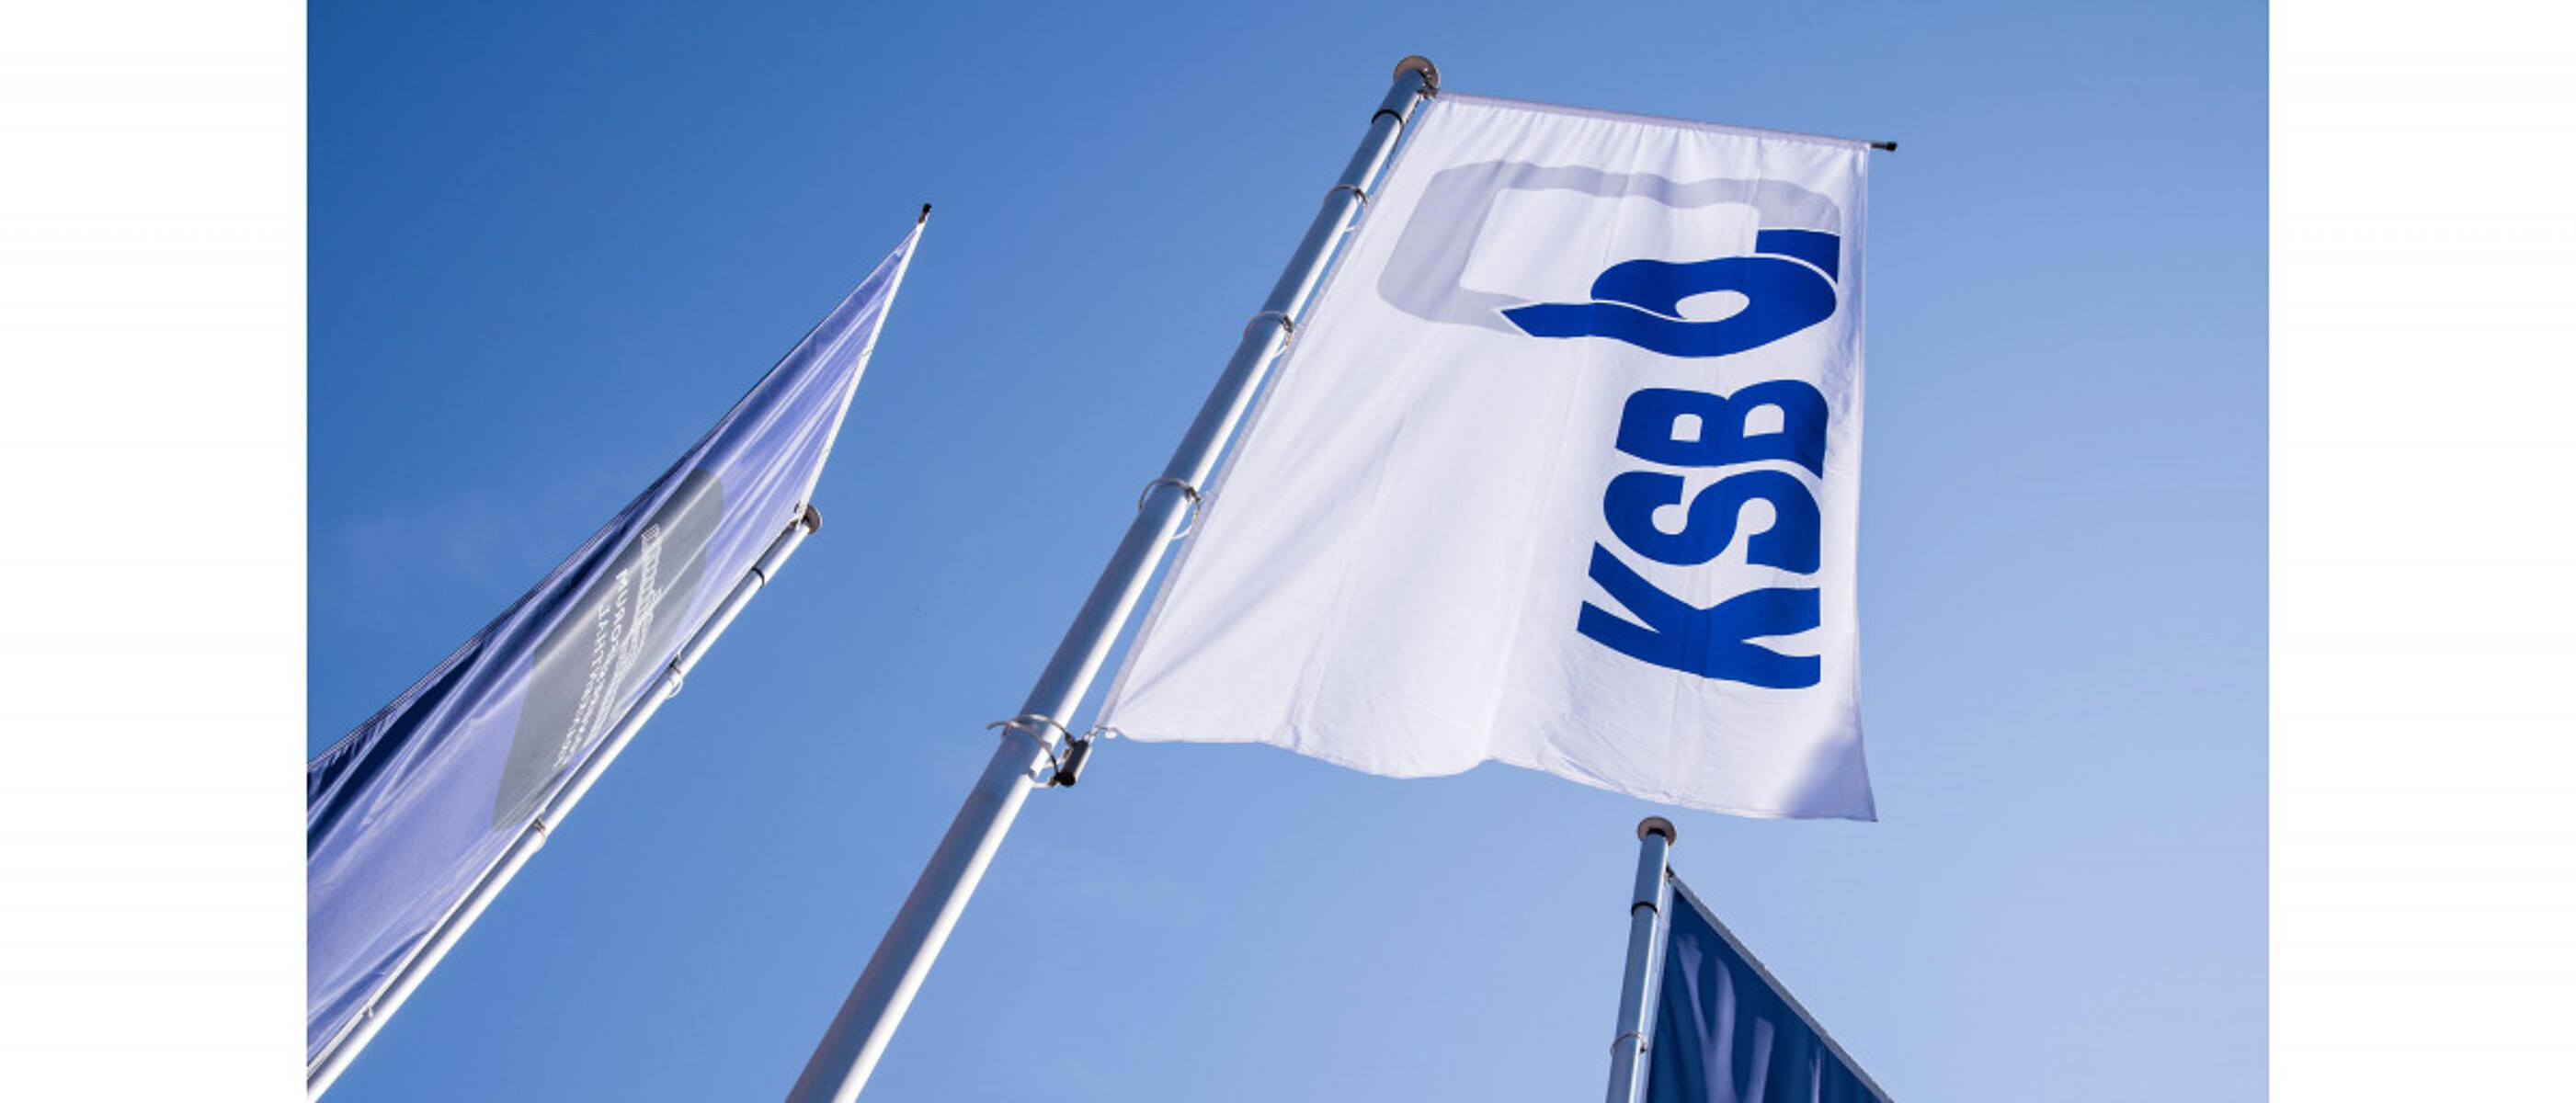 KSB flags aginst the blue sky